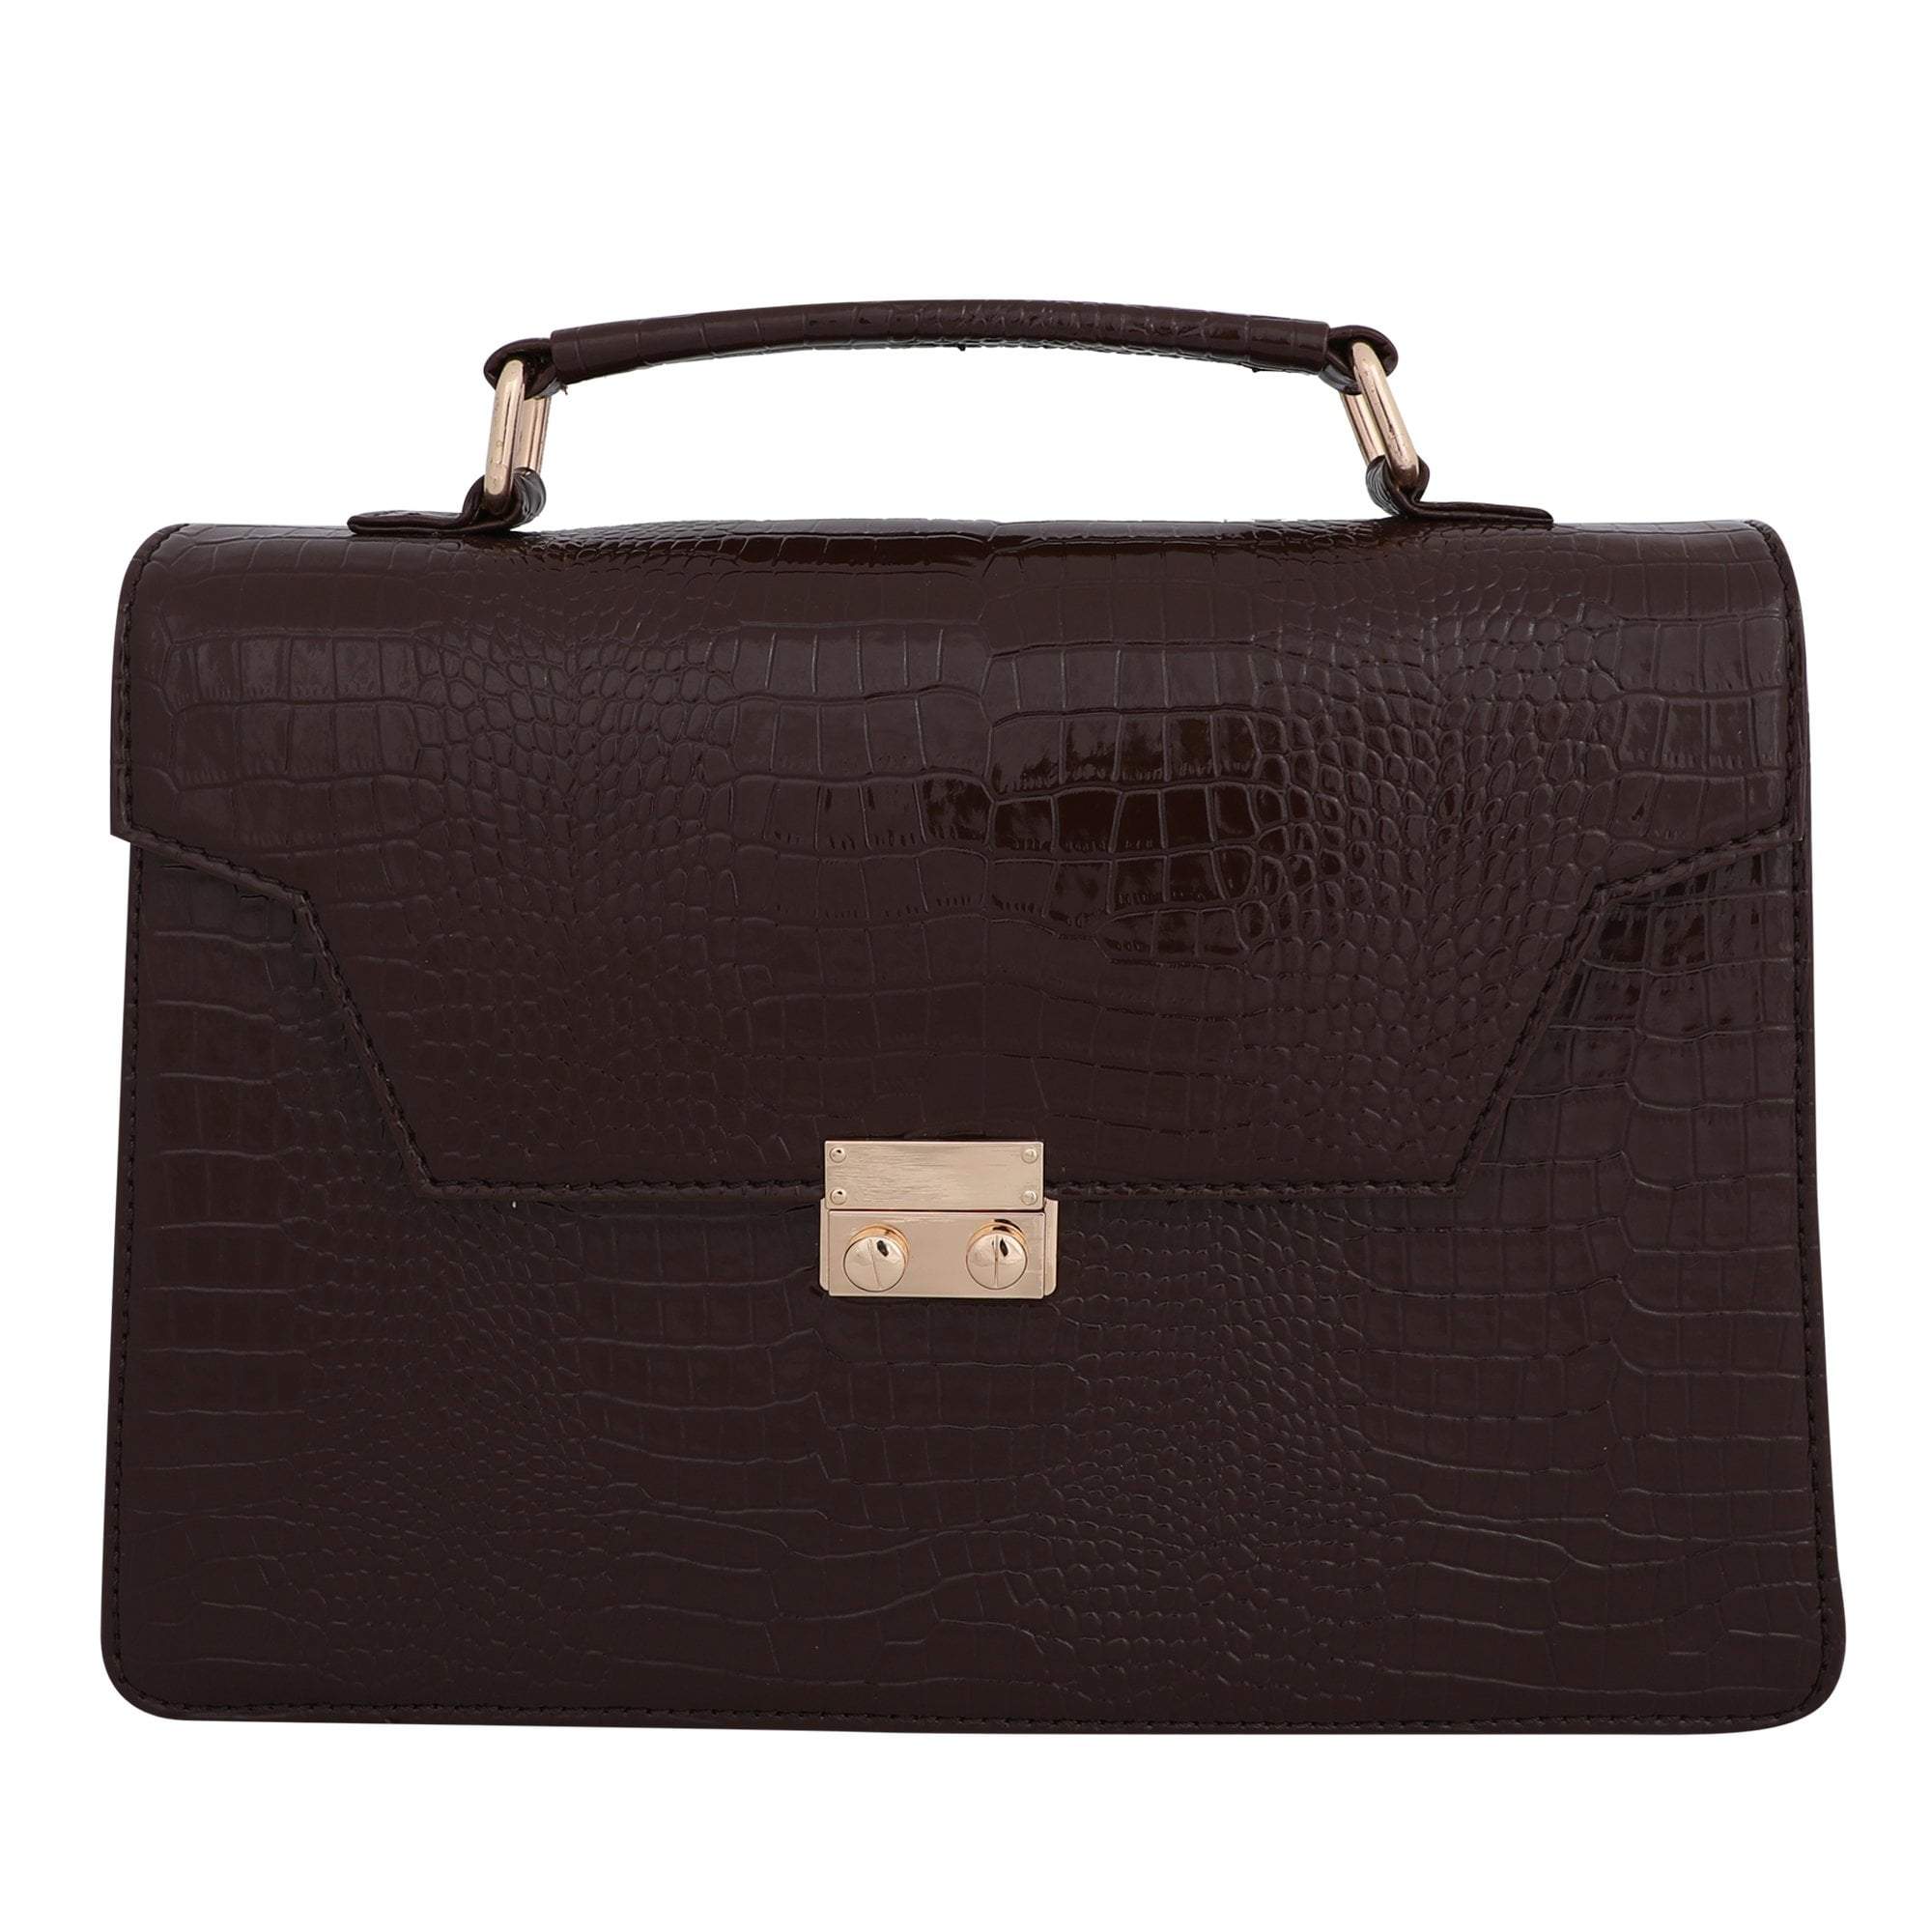 kinnoti Handbags Brown Vegan Croco Leather Satchel Hand Bag